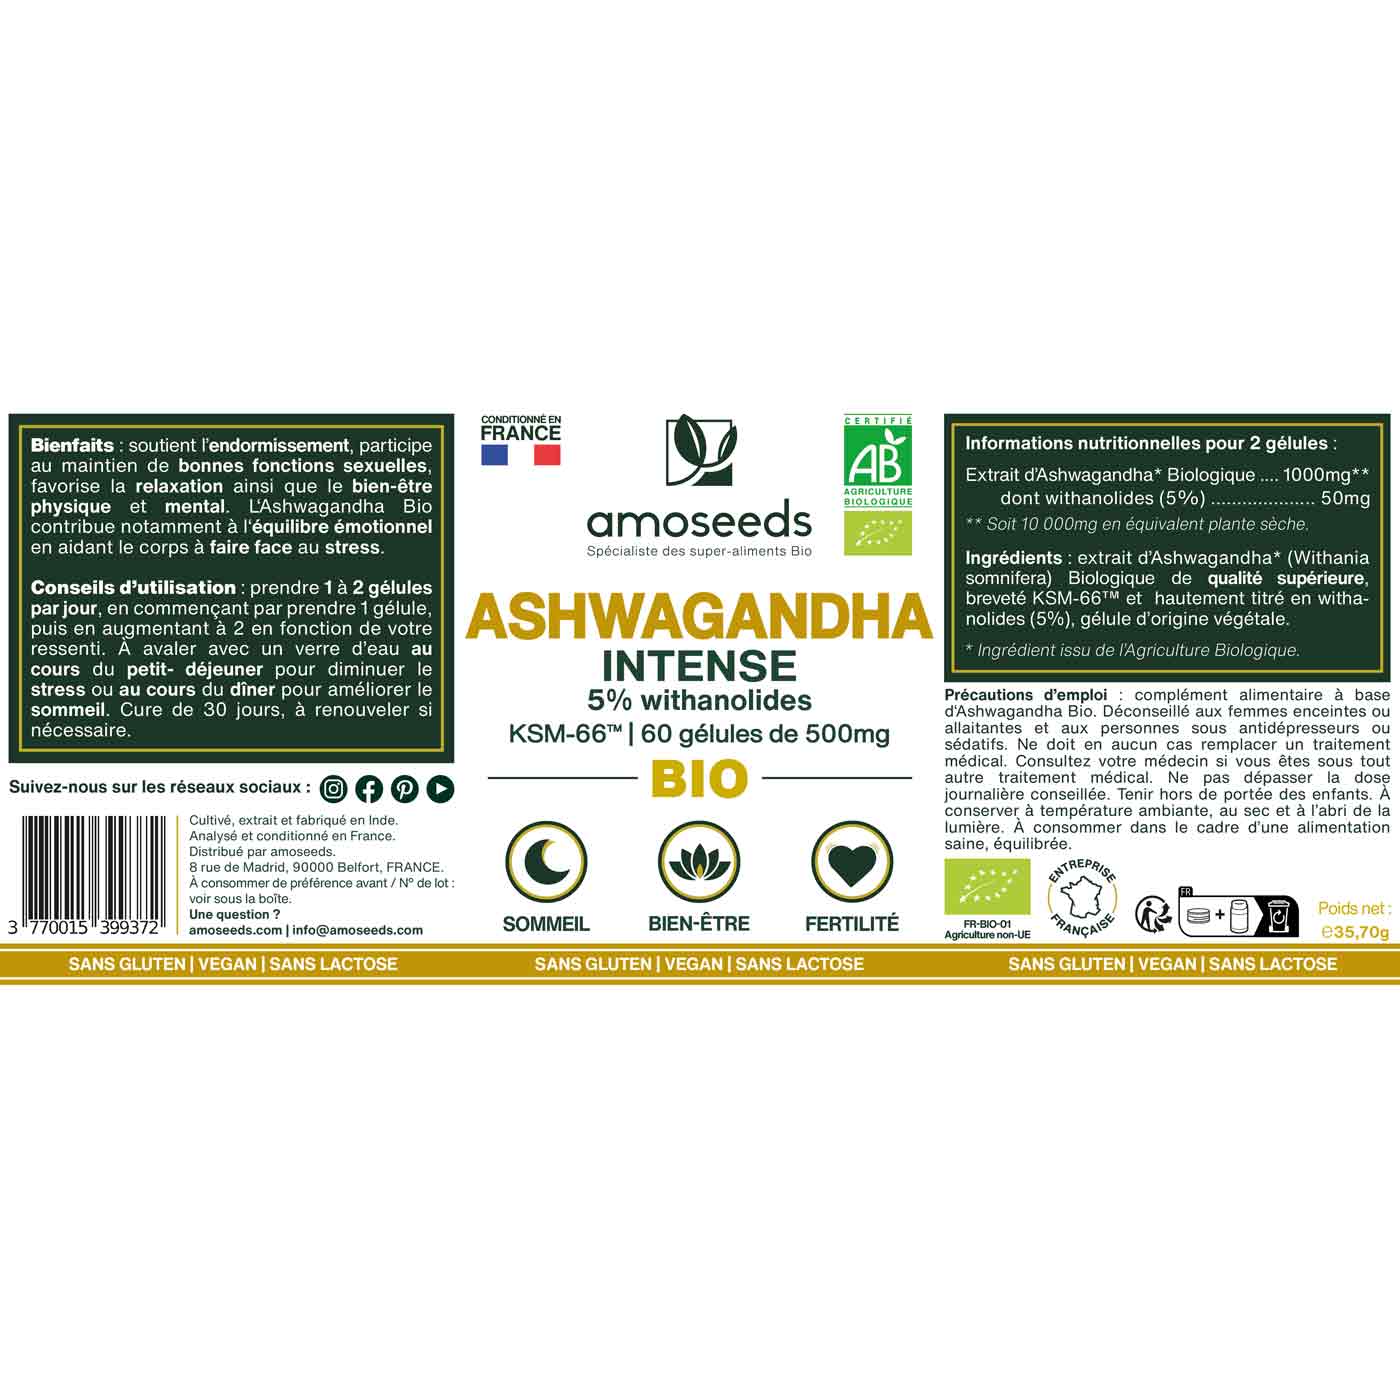 extrait Ashwgandha Bio KSM-66 gelules amoseeds specialiste des super aliments bio